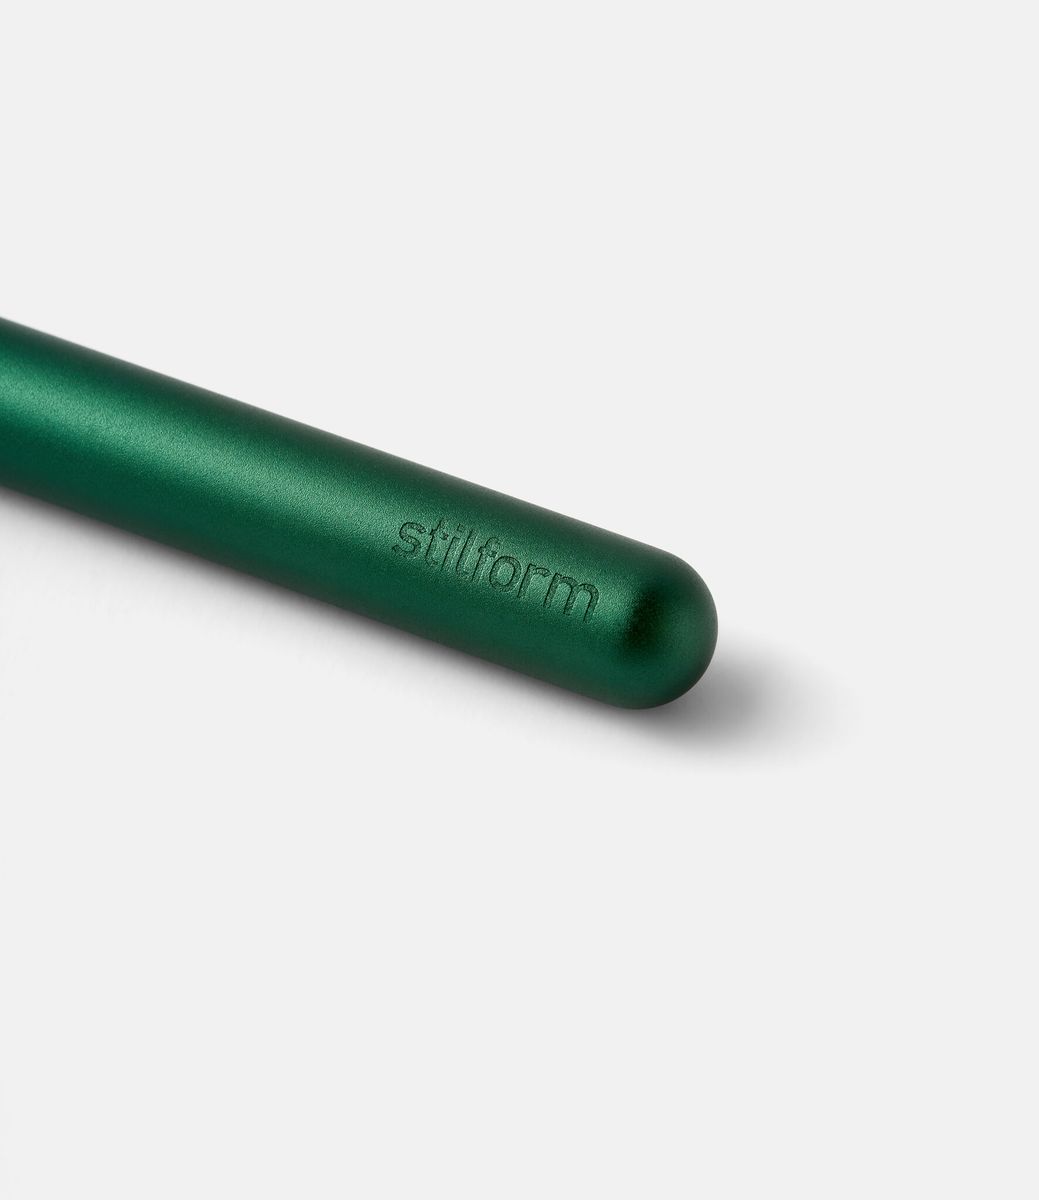 Stilform Kosmos Aurora Green — ручка с магнитным механизмом